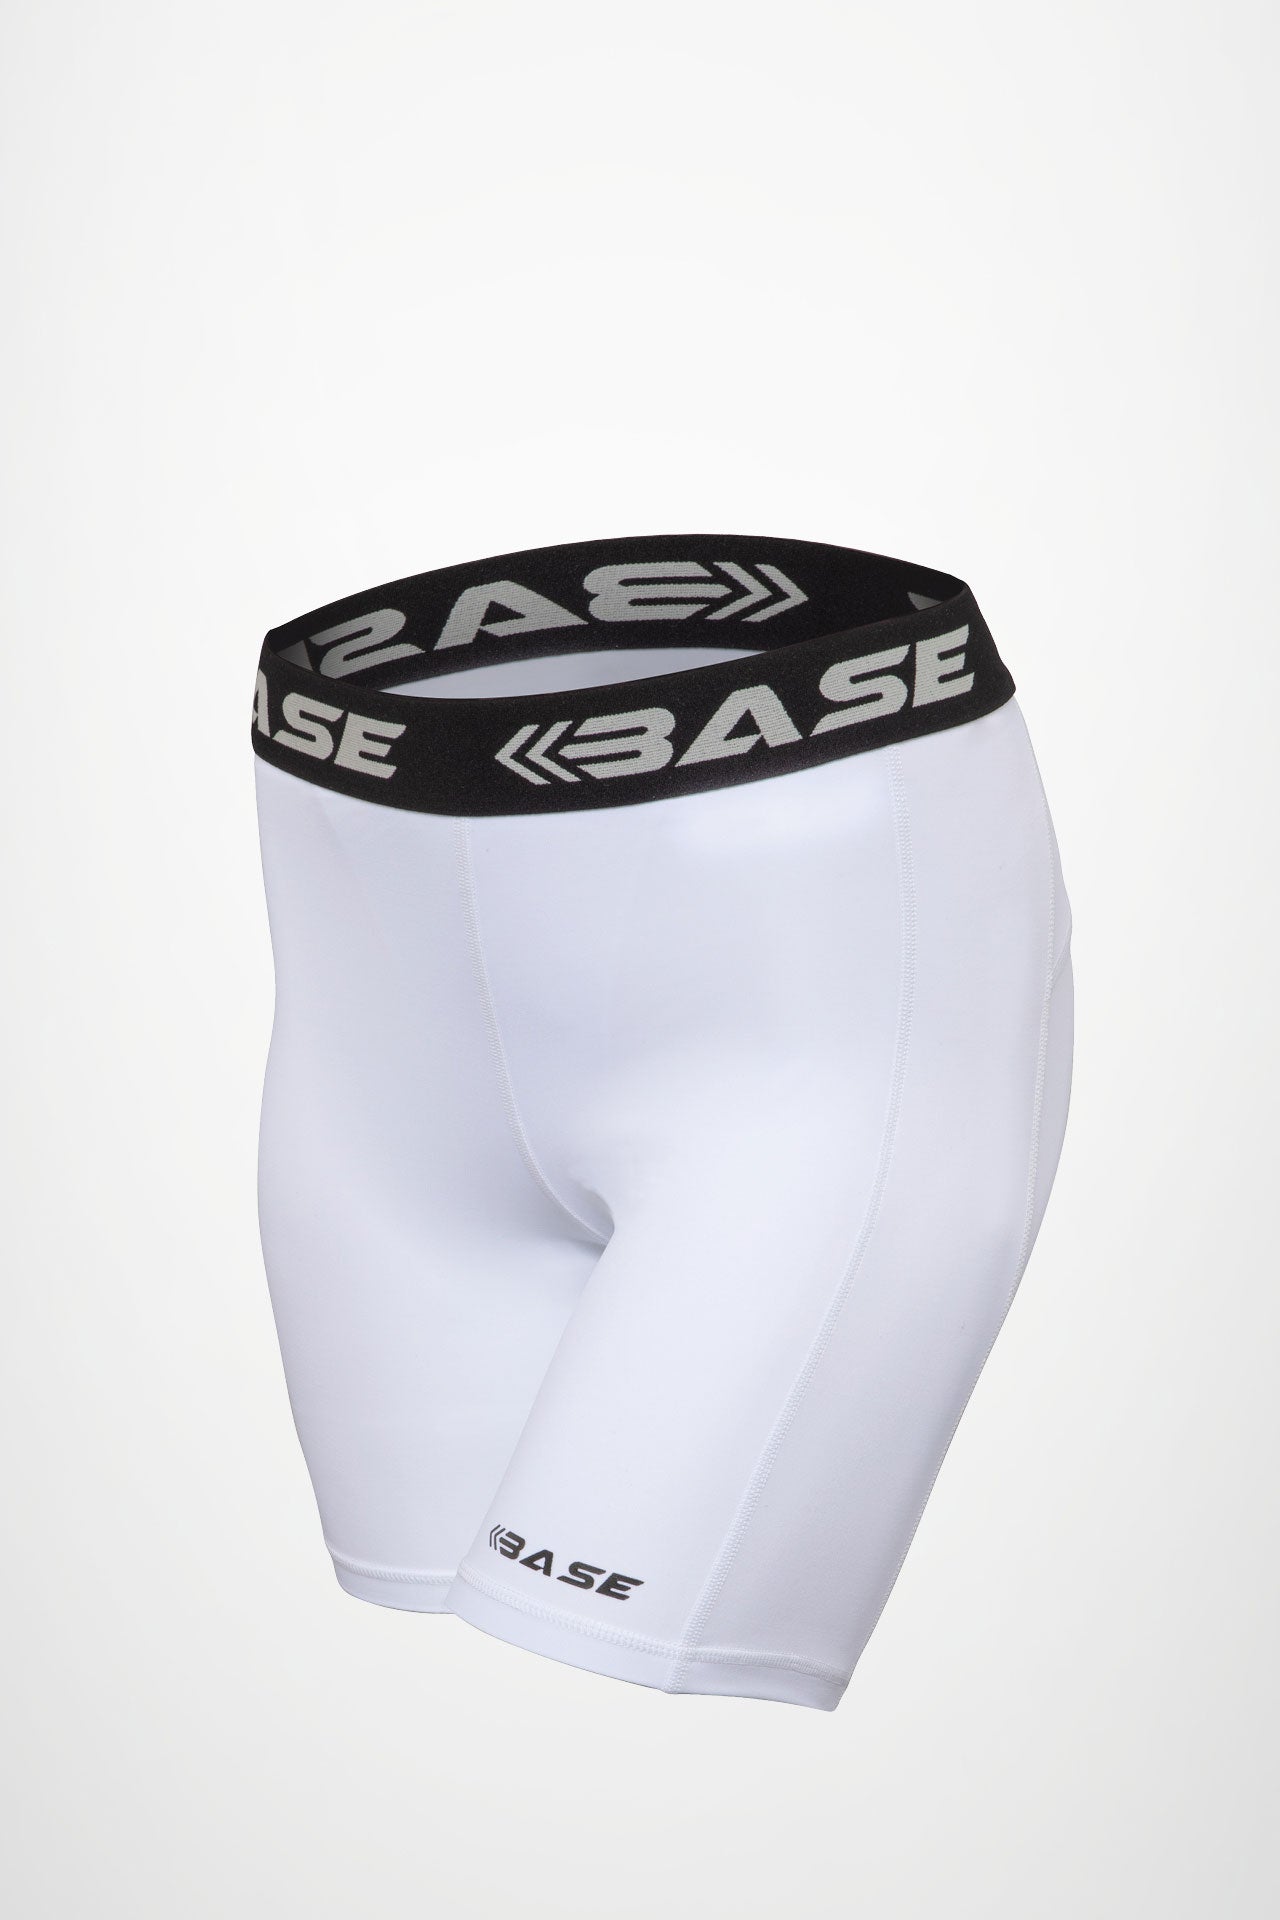 BASE Women's Compression Shorts - Black – BASE Compression